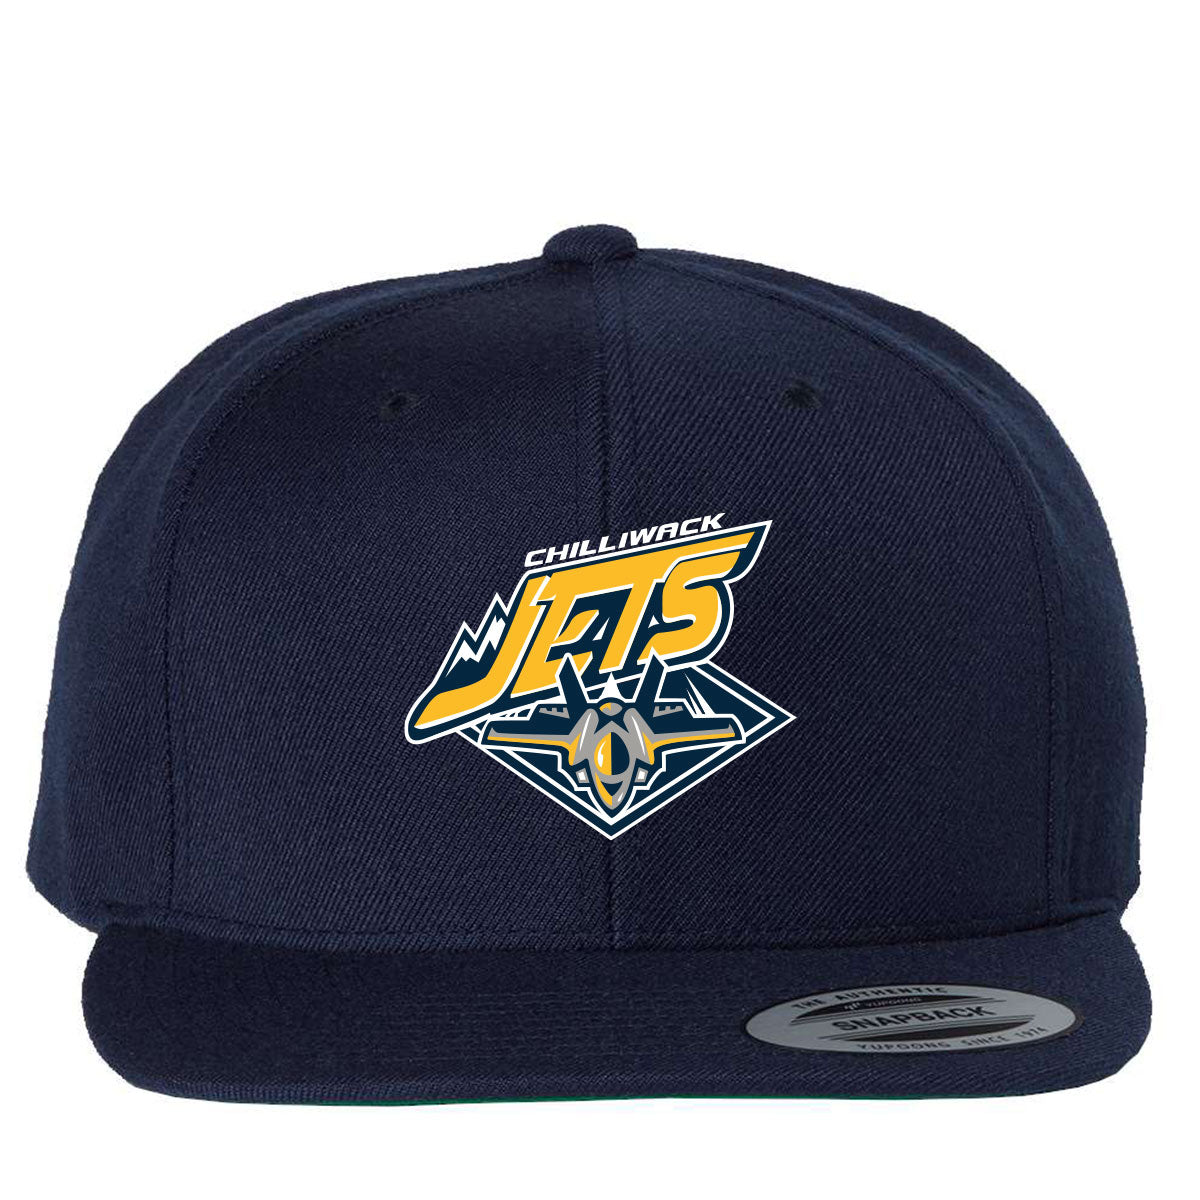 Chilliwack Jets -- Snapback Hat